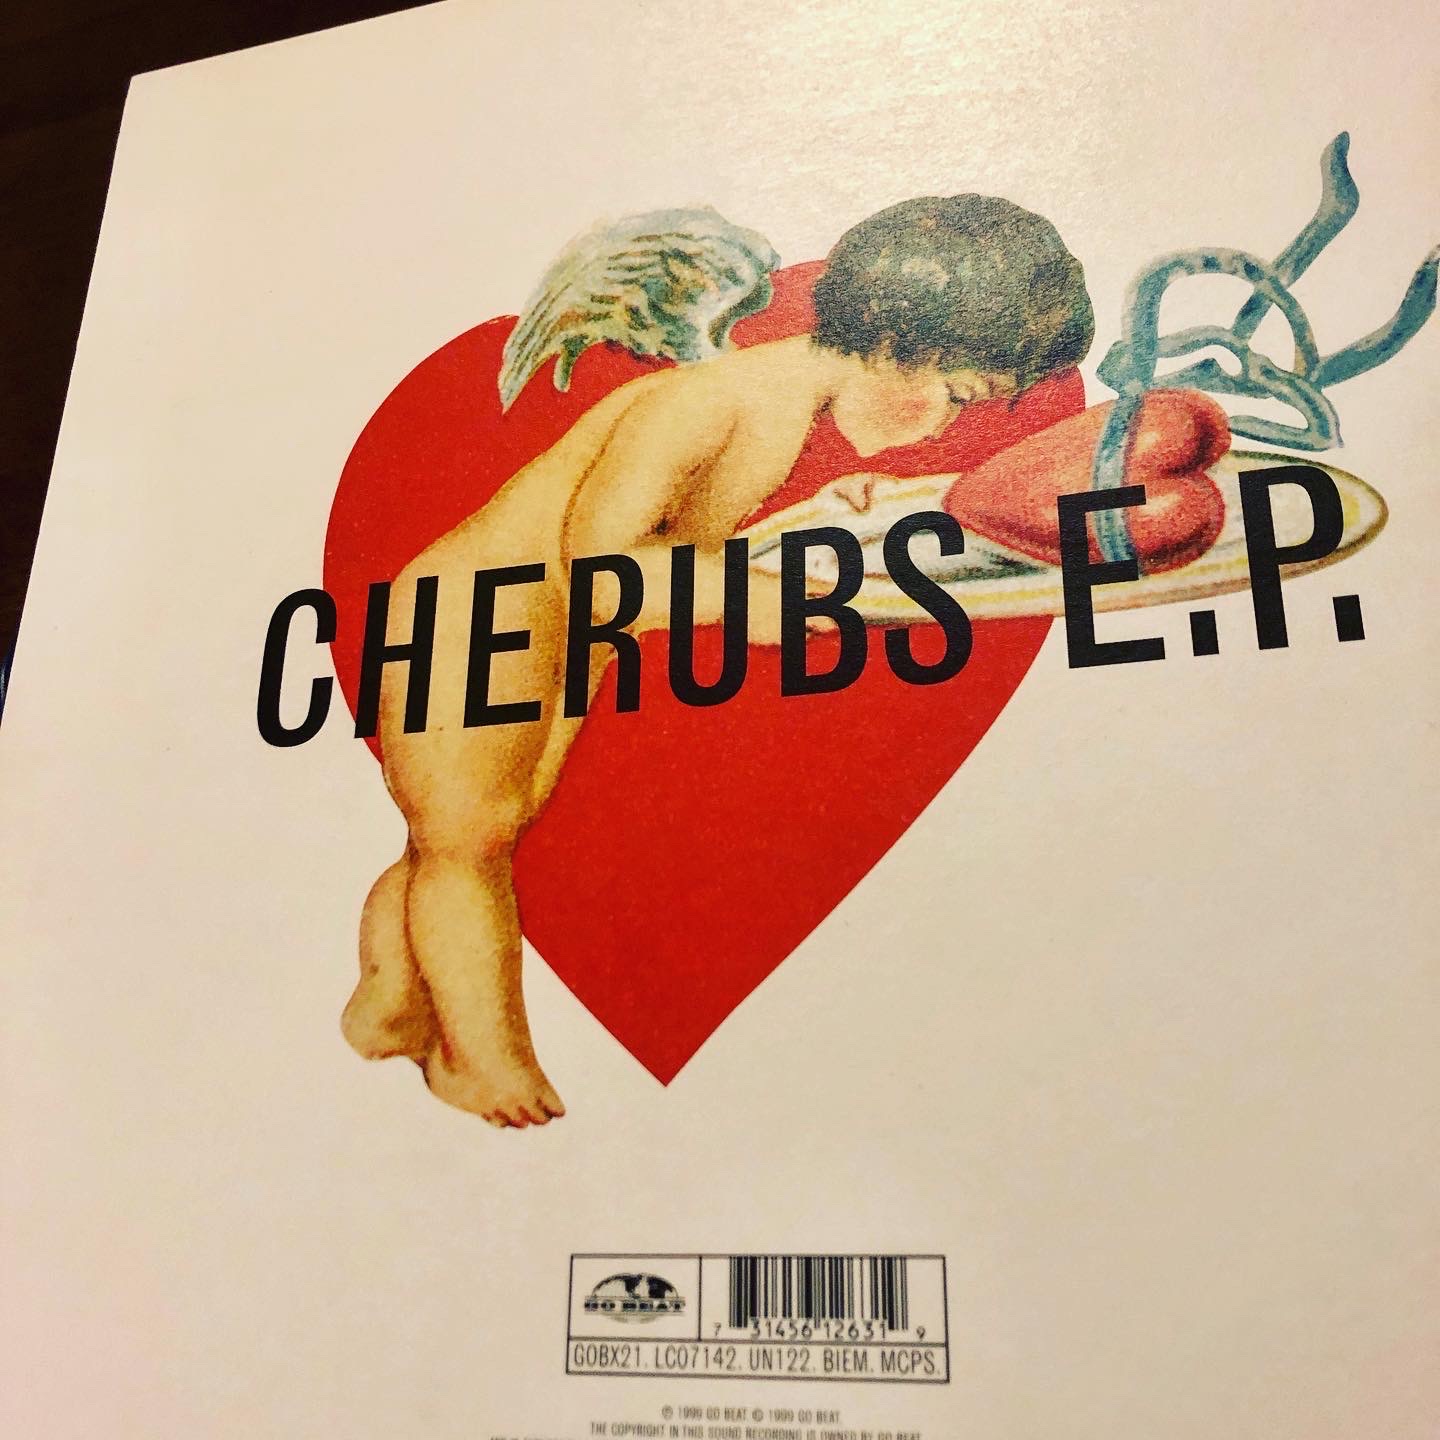 Arab Strap Cherubs EP Back Cover